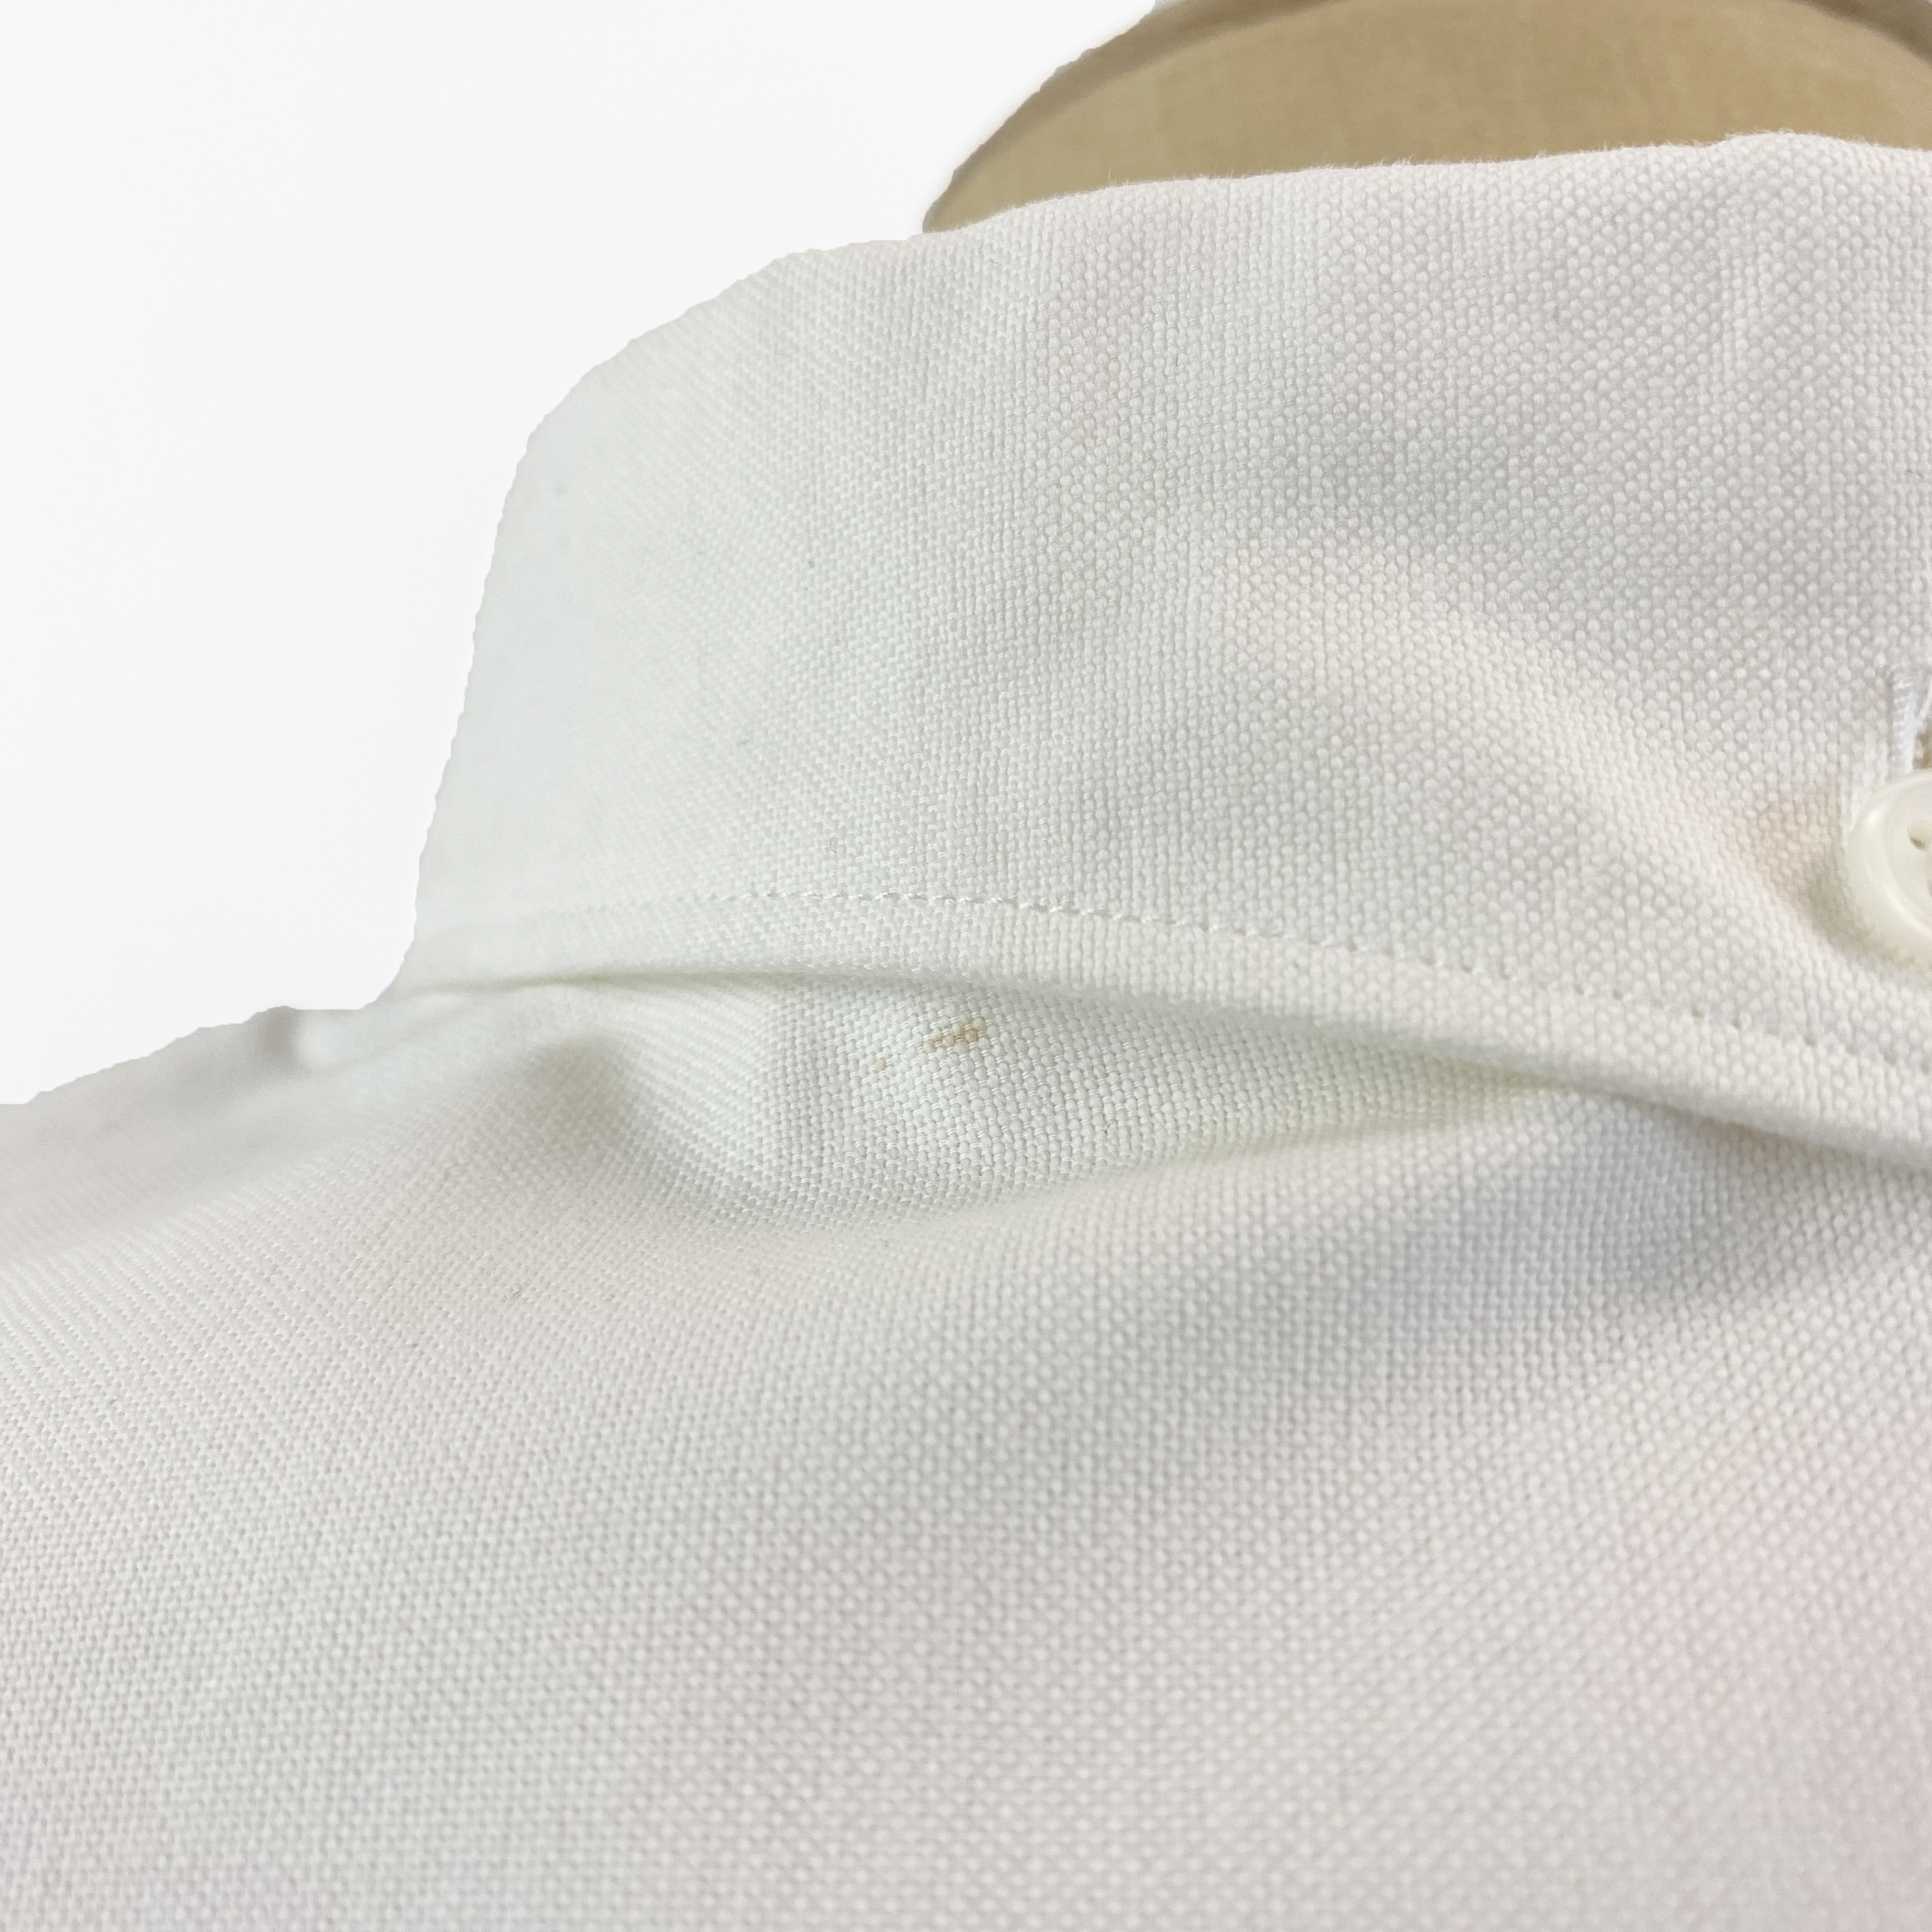 Lacoste Men's Cream/Navy Shirt